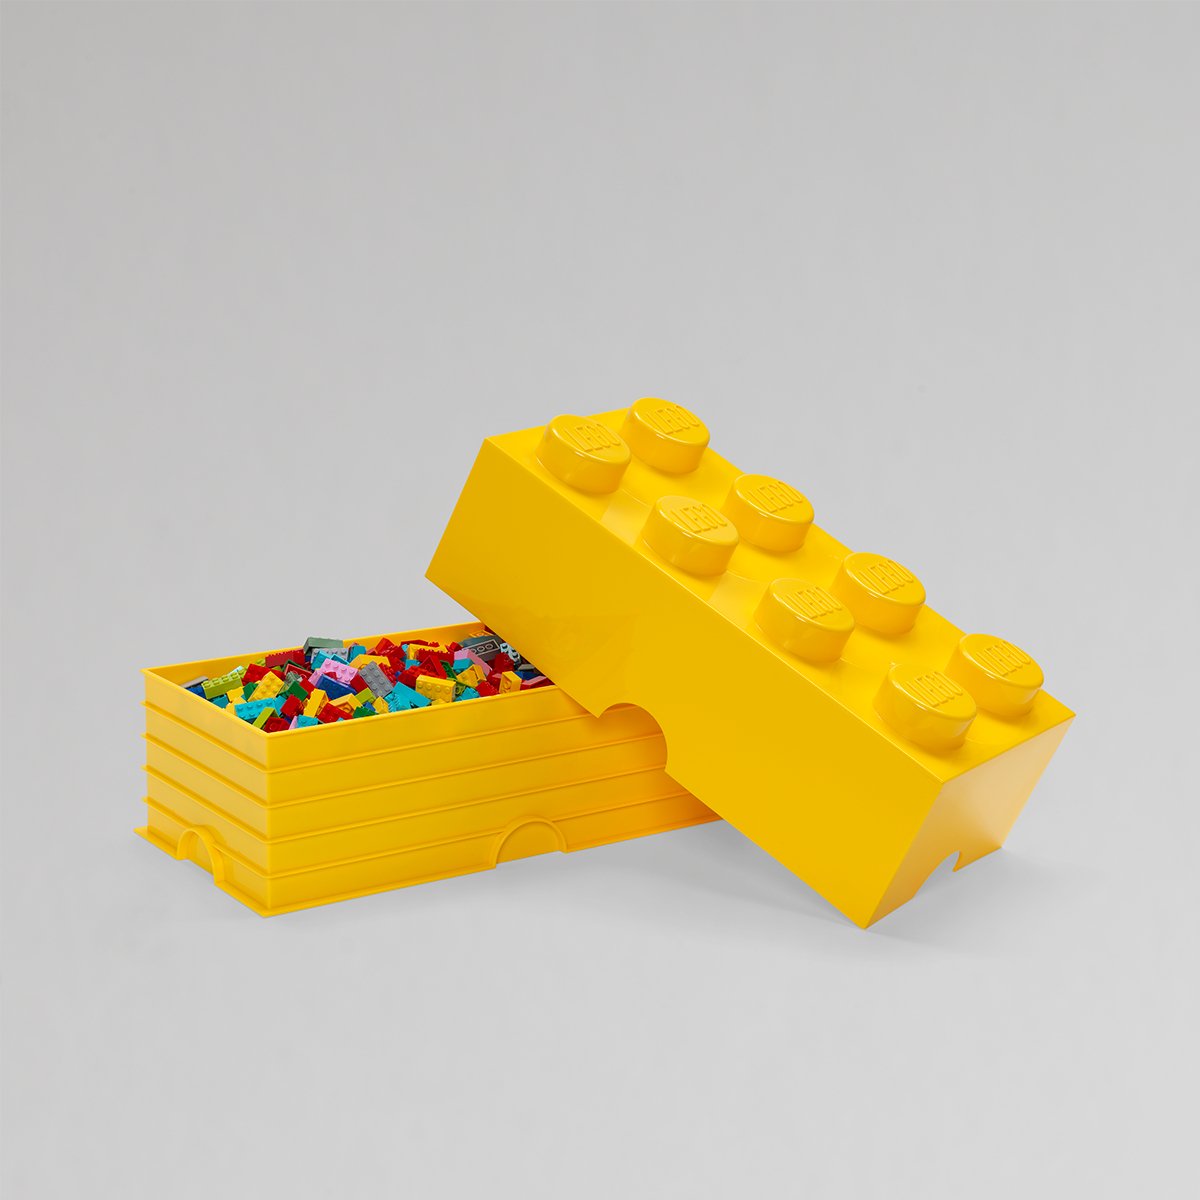 Caja de almacenamiento LEGO Rojo 8 Ladrillos